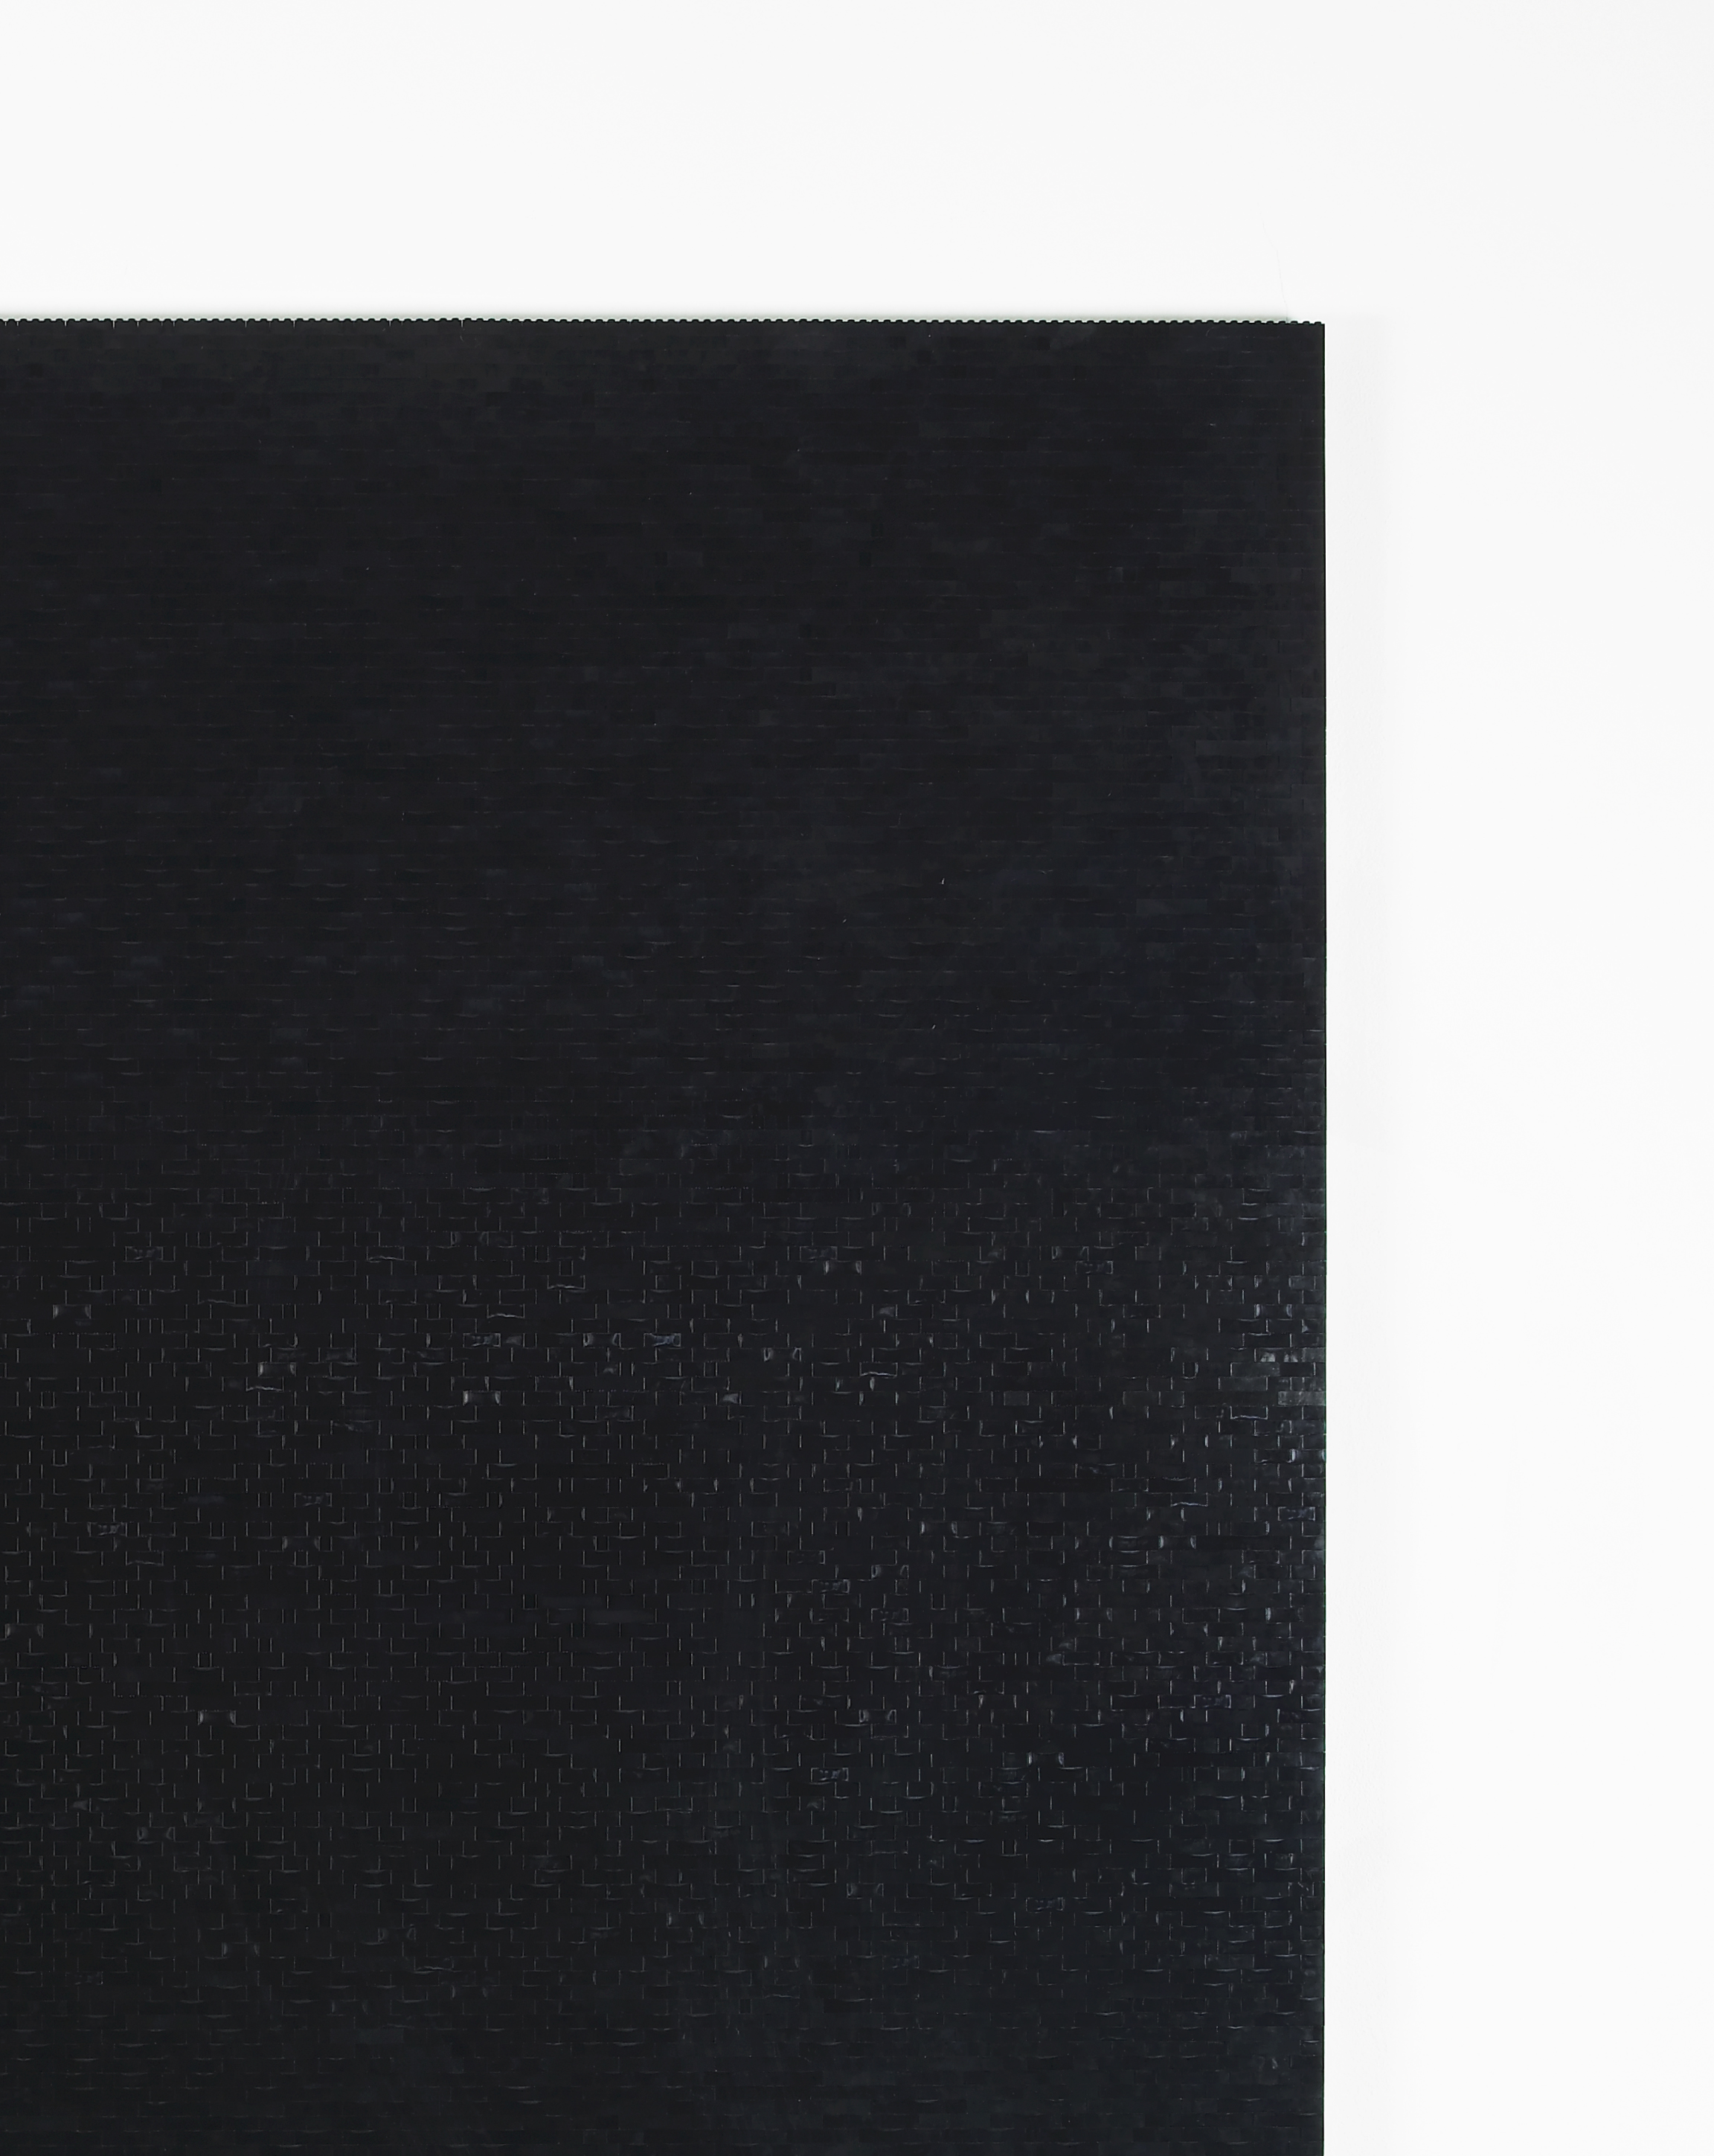     Michael Wilkinson Black Wall 7 (Detail) 2013 Black lego, wooden frame 185 x 185 x 3 cm / 72.8 x 72.8 x 1.1 in    